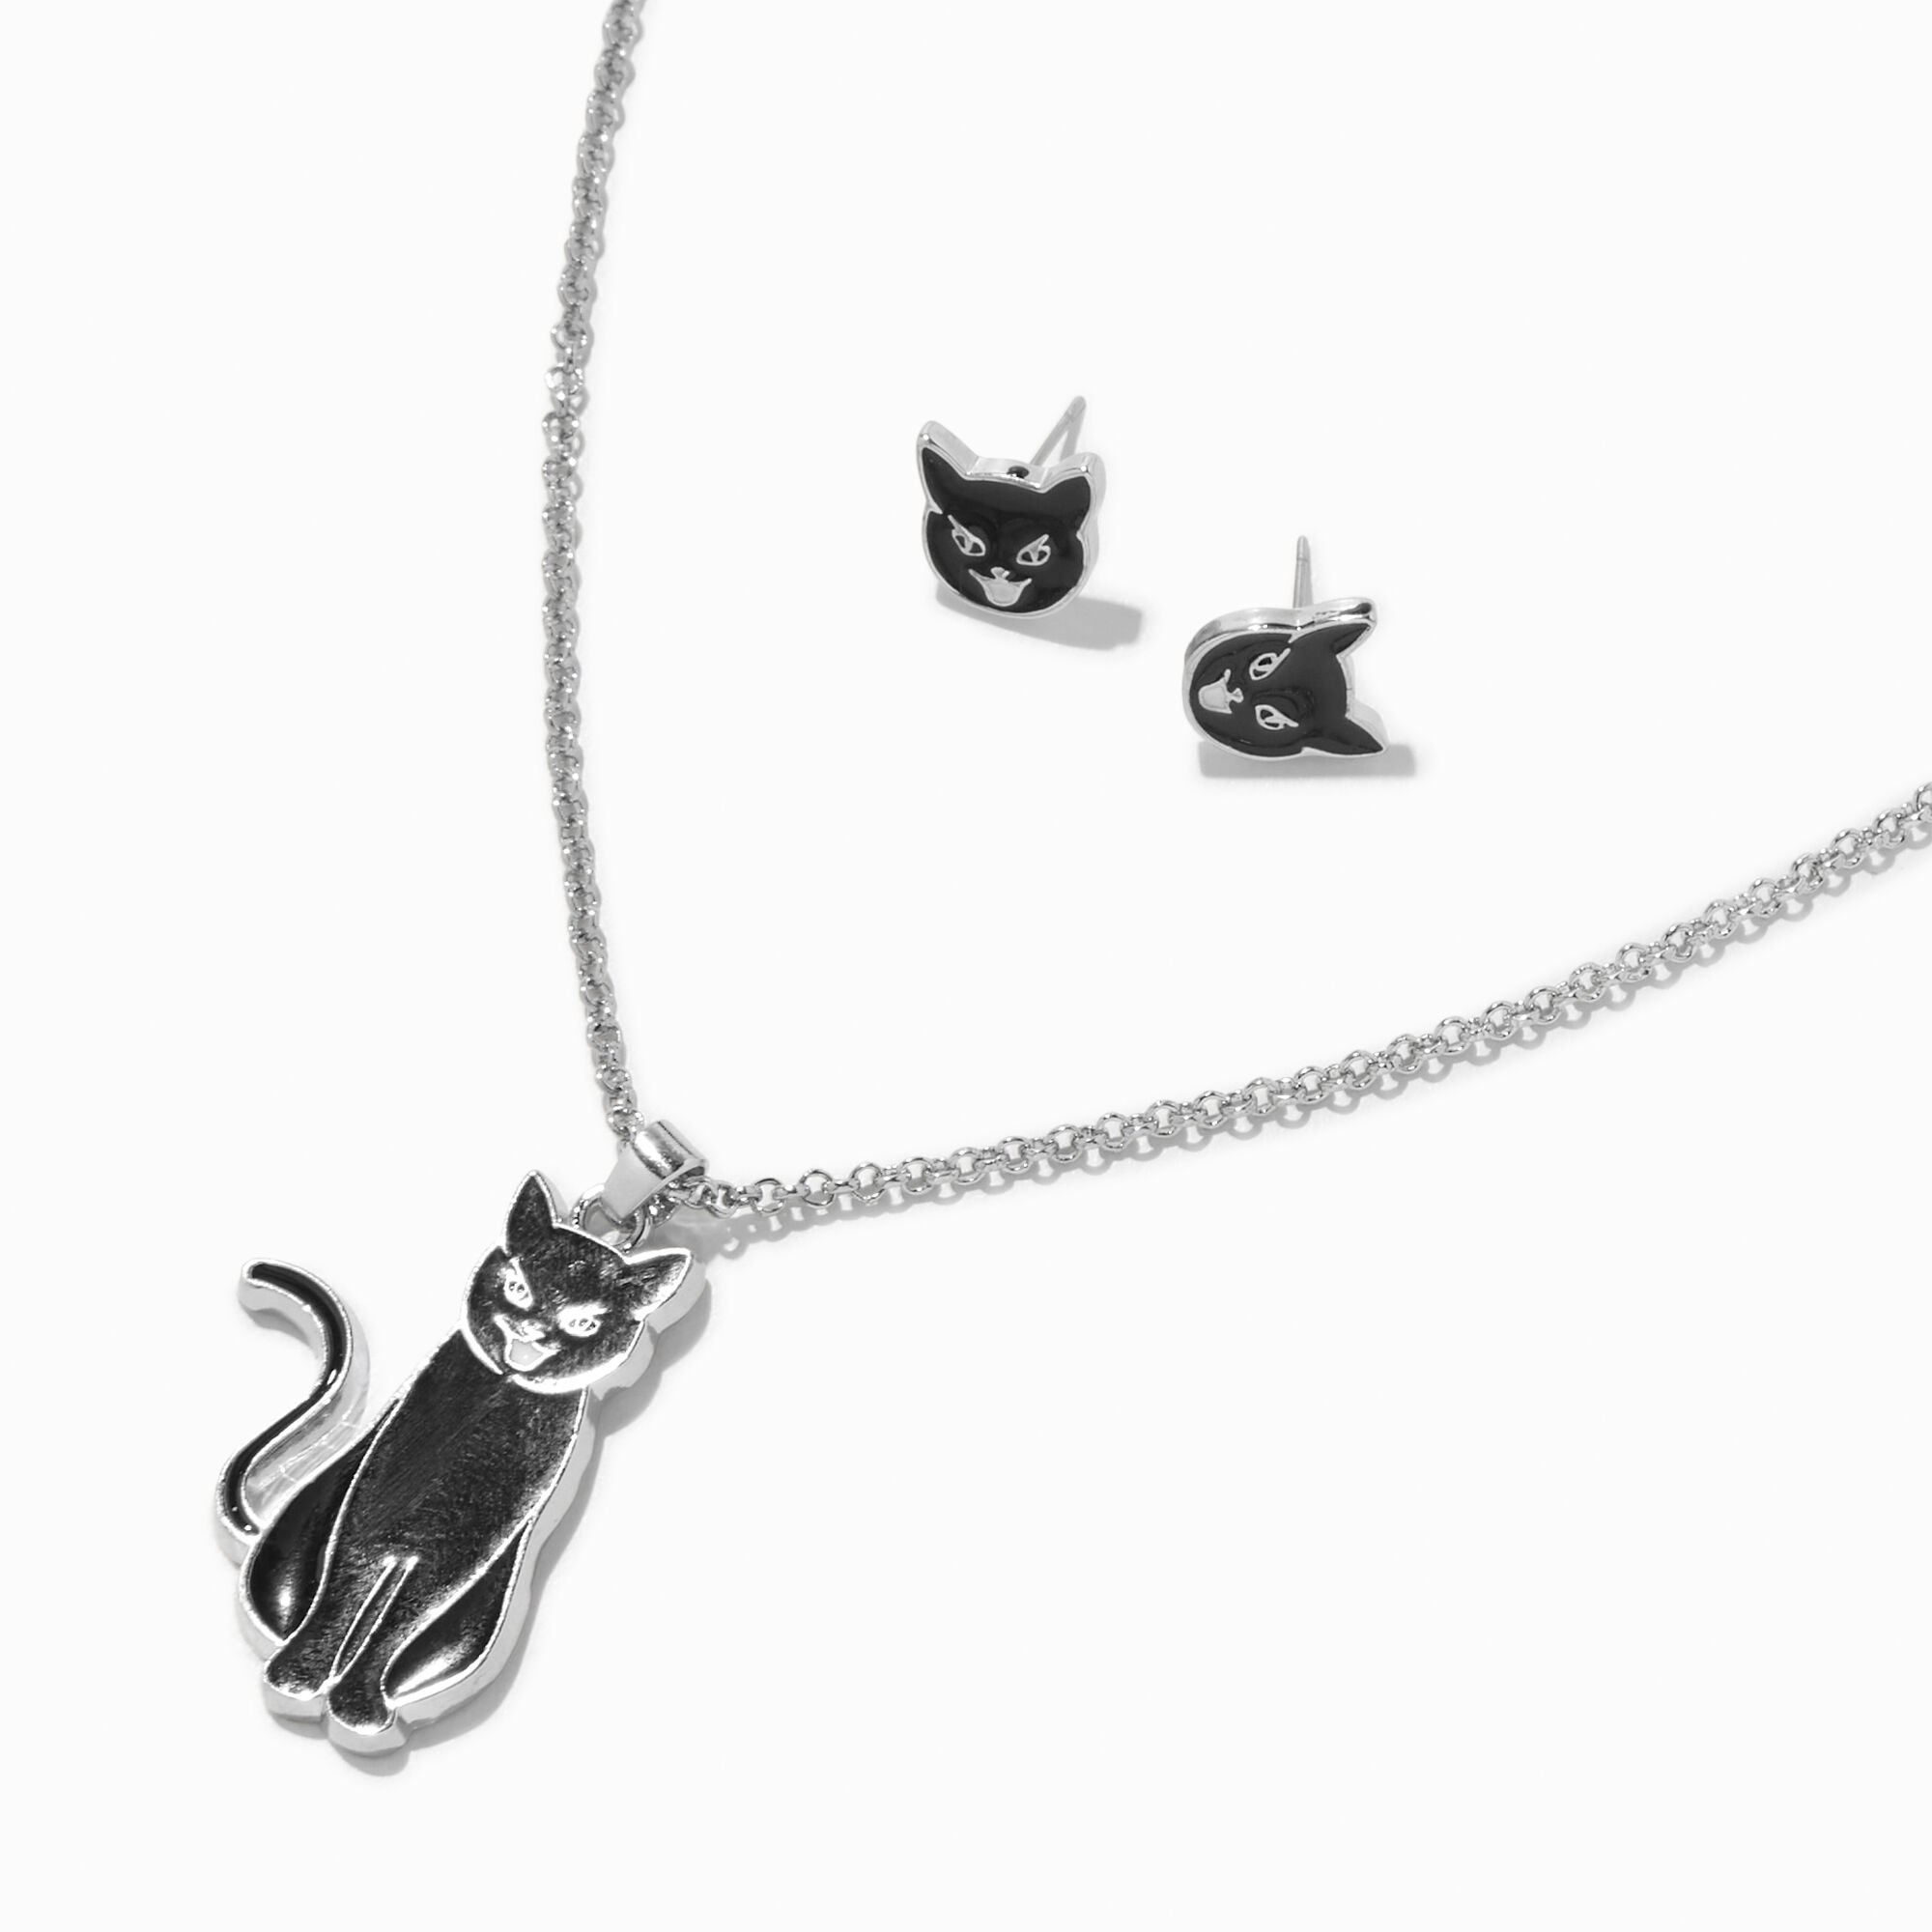 Platinum Evara Diamond Necklace & Earrings Set JL PT N 180